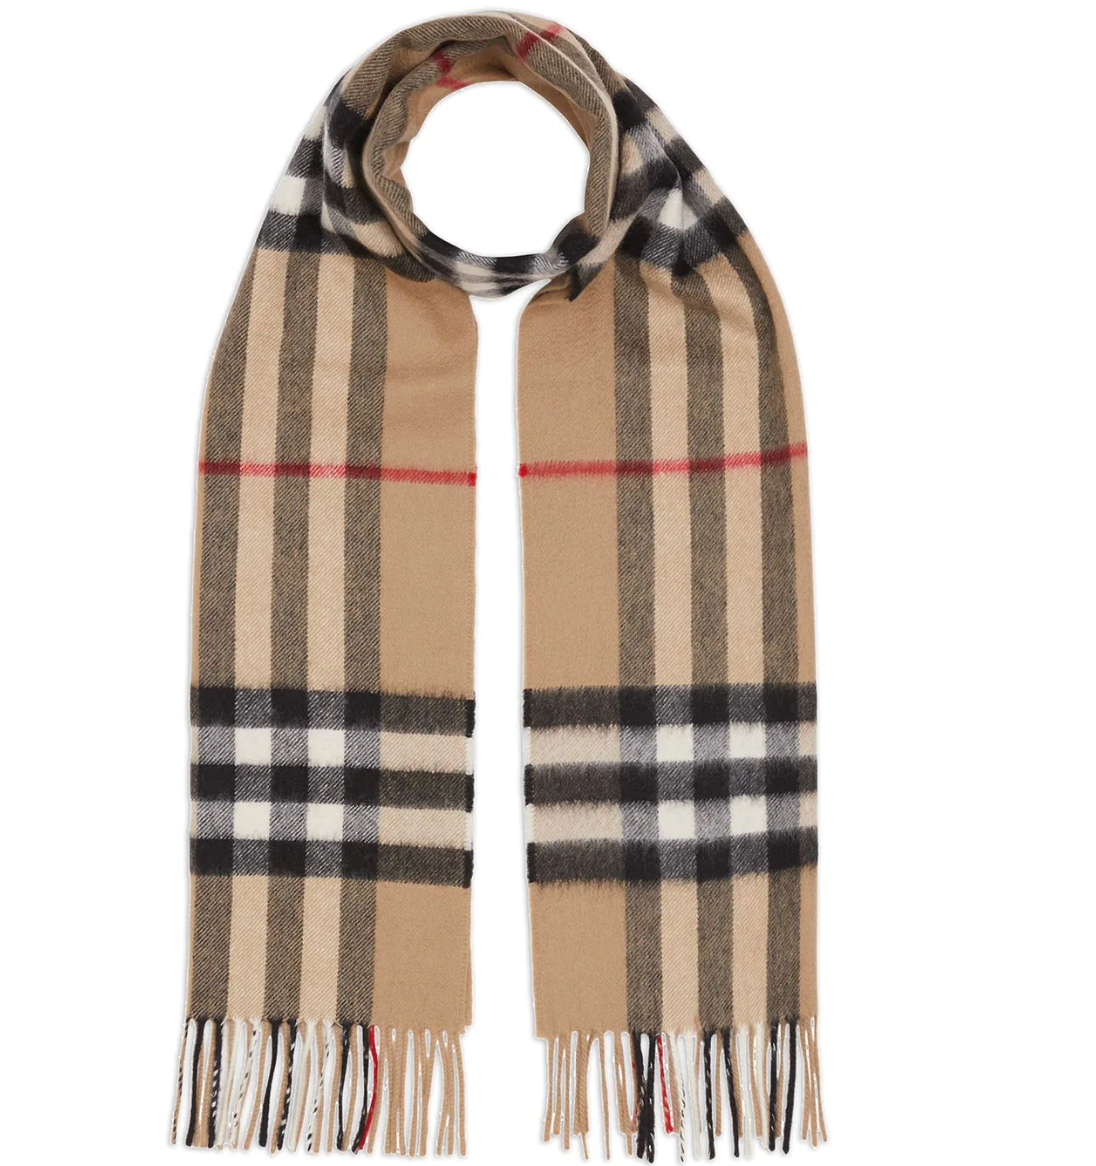 Burberry cashmere Classic Check scarf